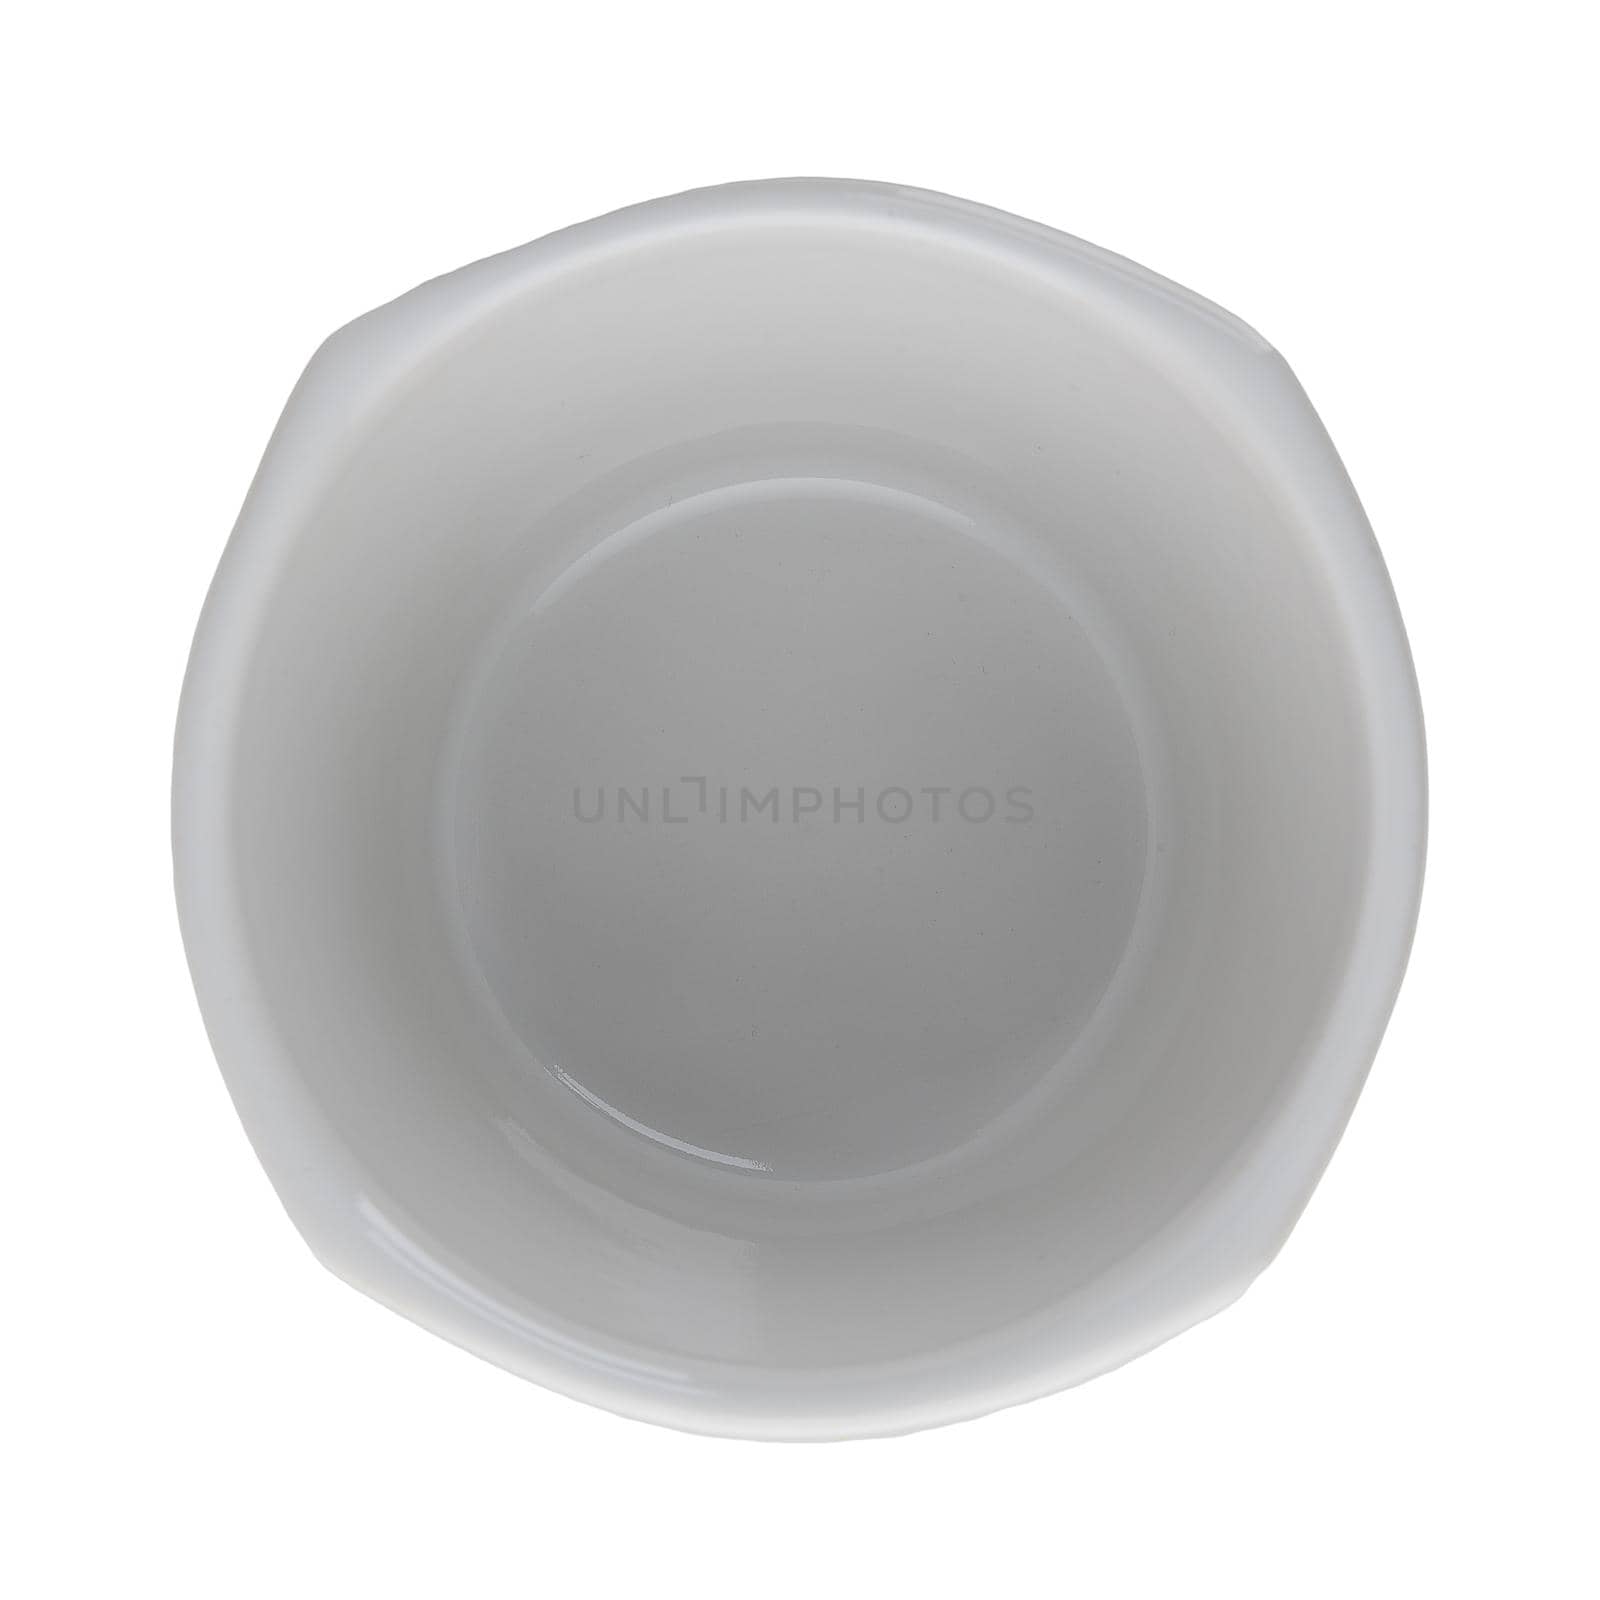 White ceramic bowl by homydesign